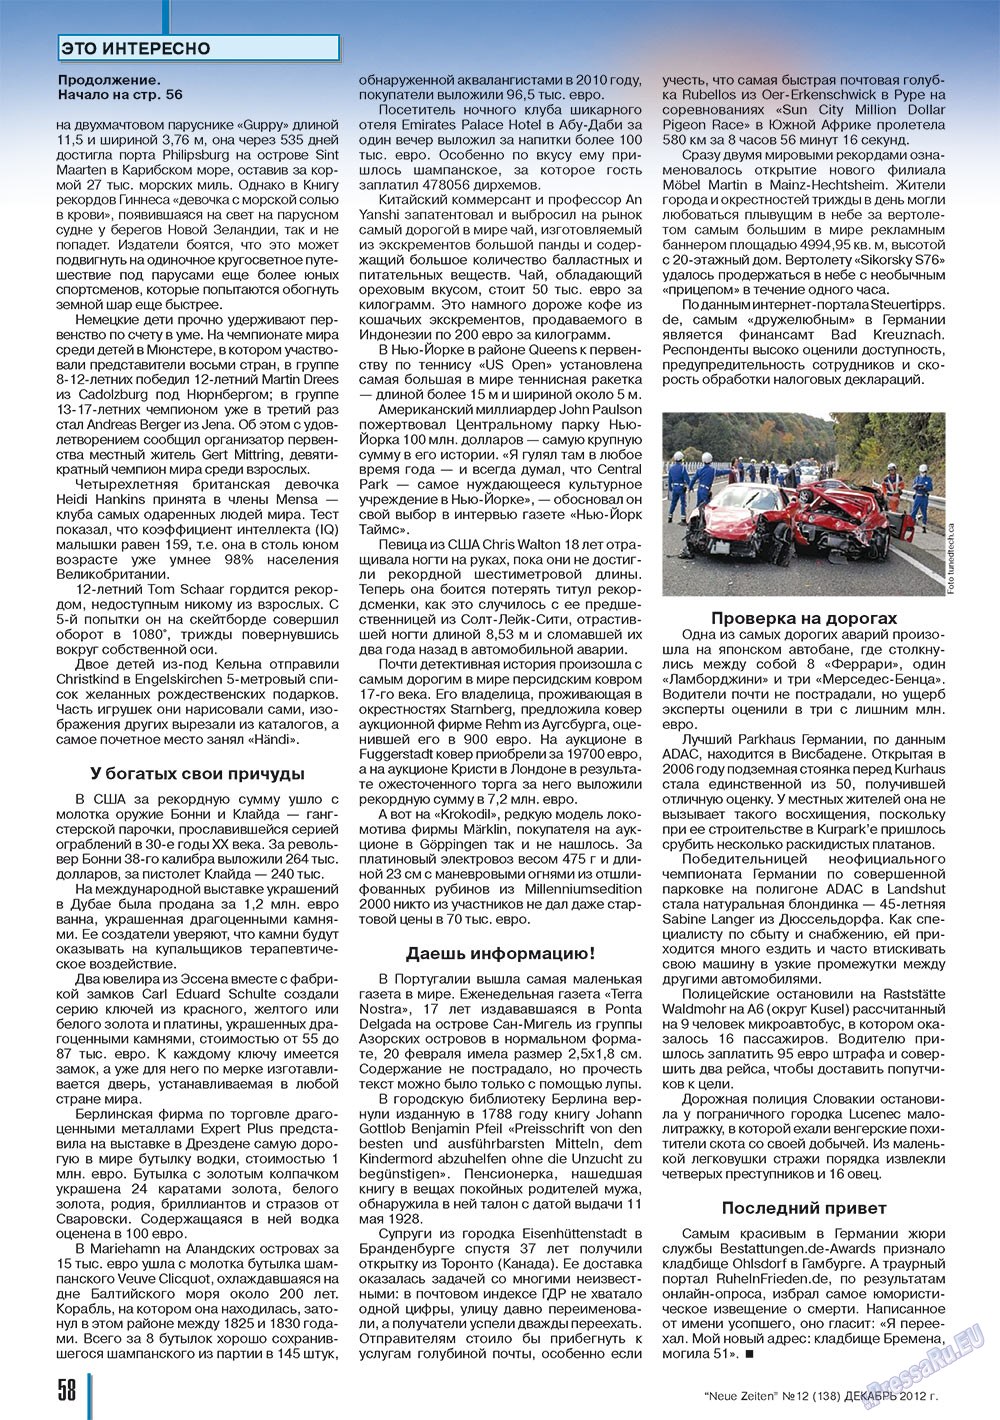 Neue Zeiten (журнал). 2012 год, номер 12, стр. 58